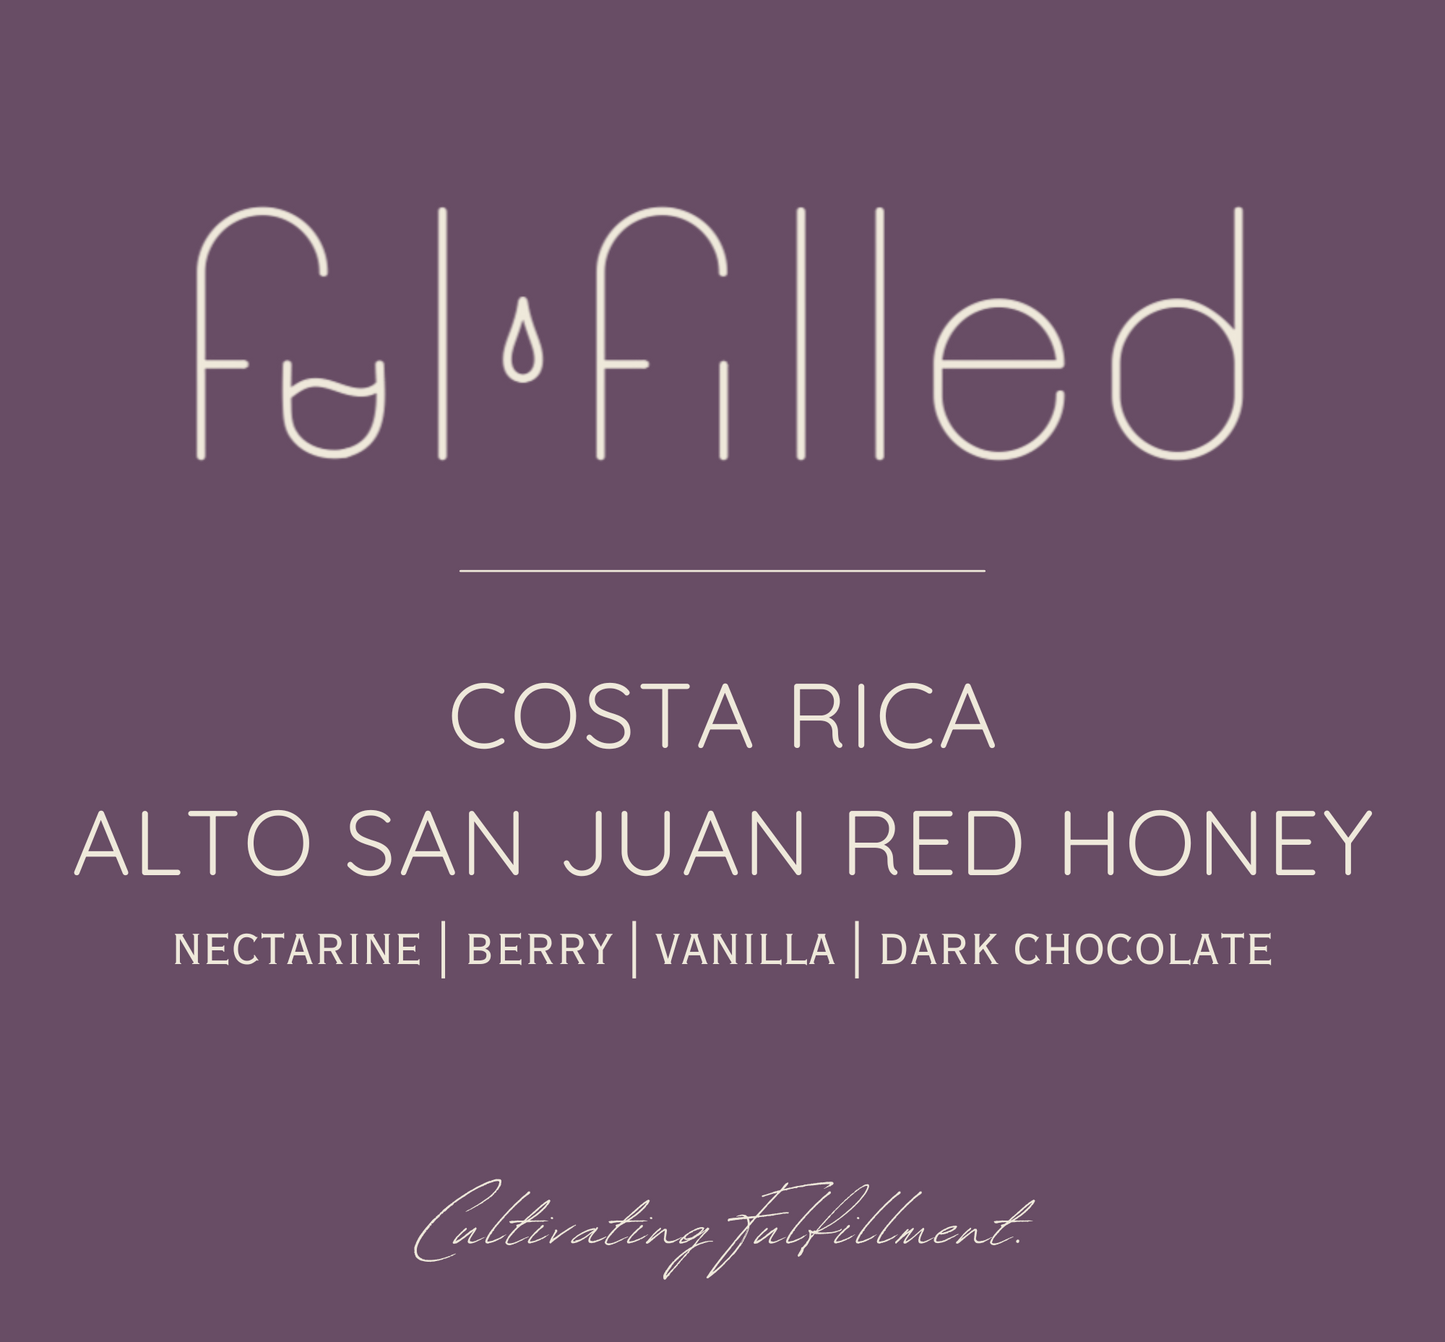 COSTA RICA | ALTO SAN JUAN RED HONEY